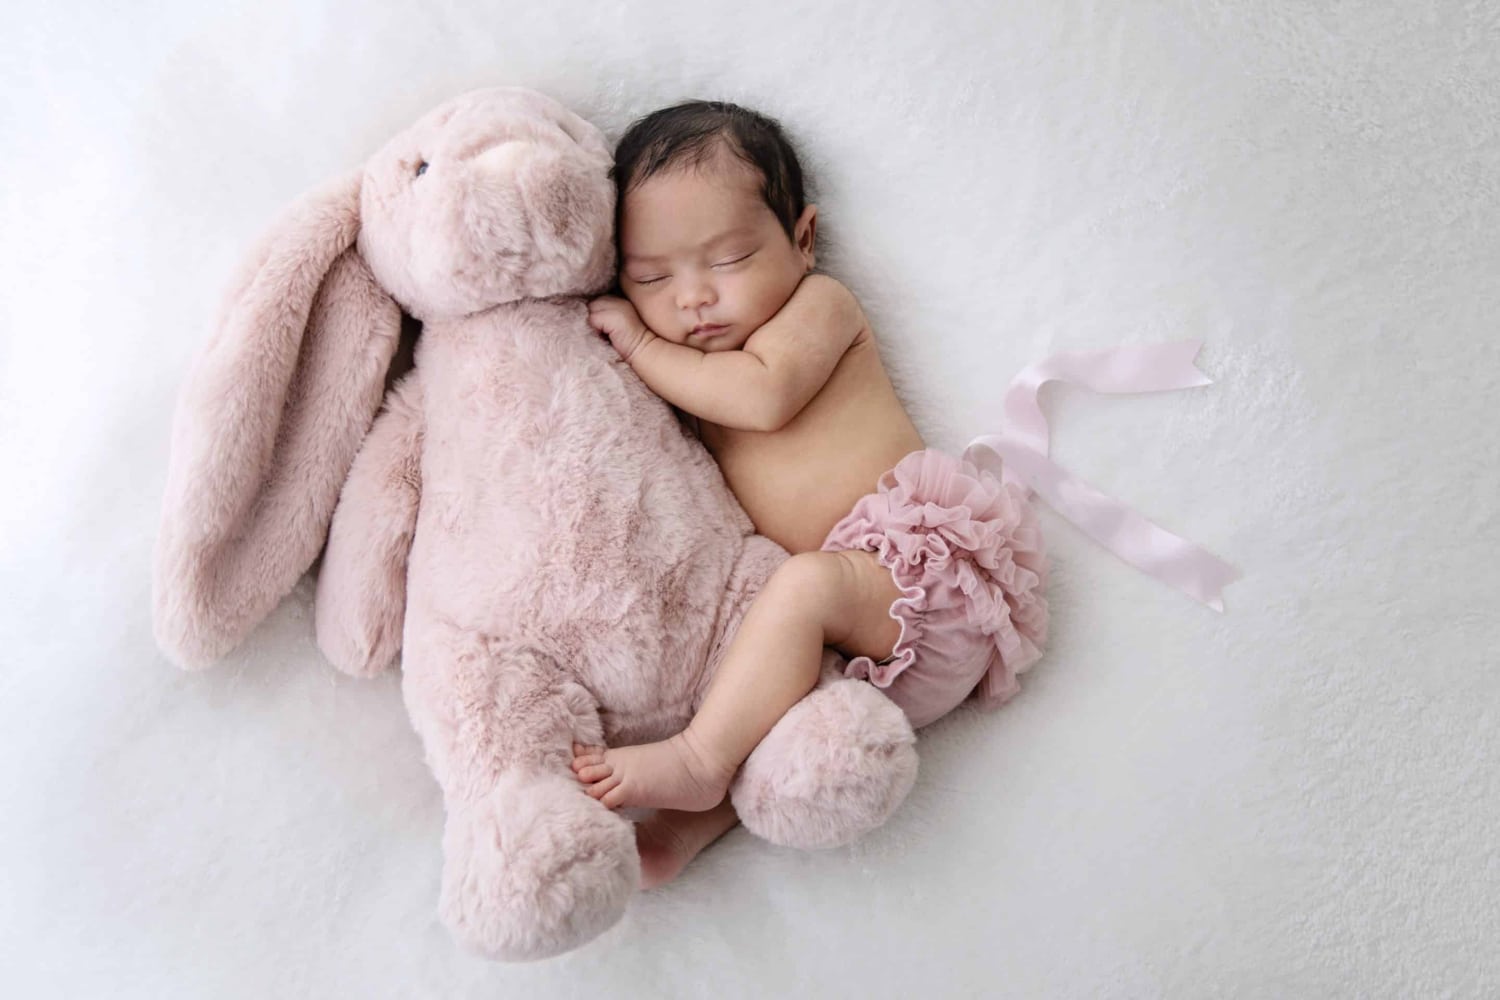 A newborn baby snuggles with a stuffed rabbit.